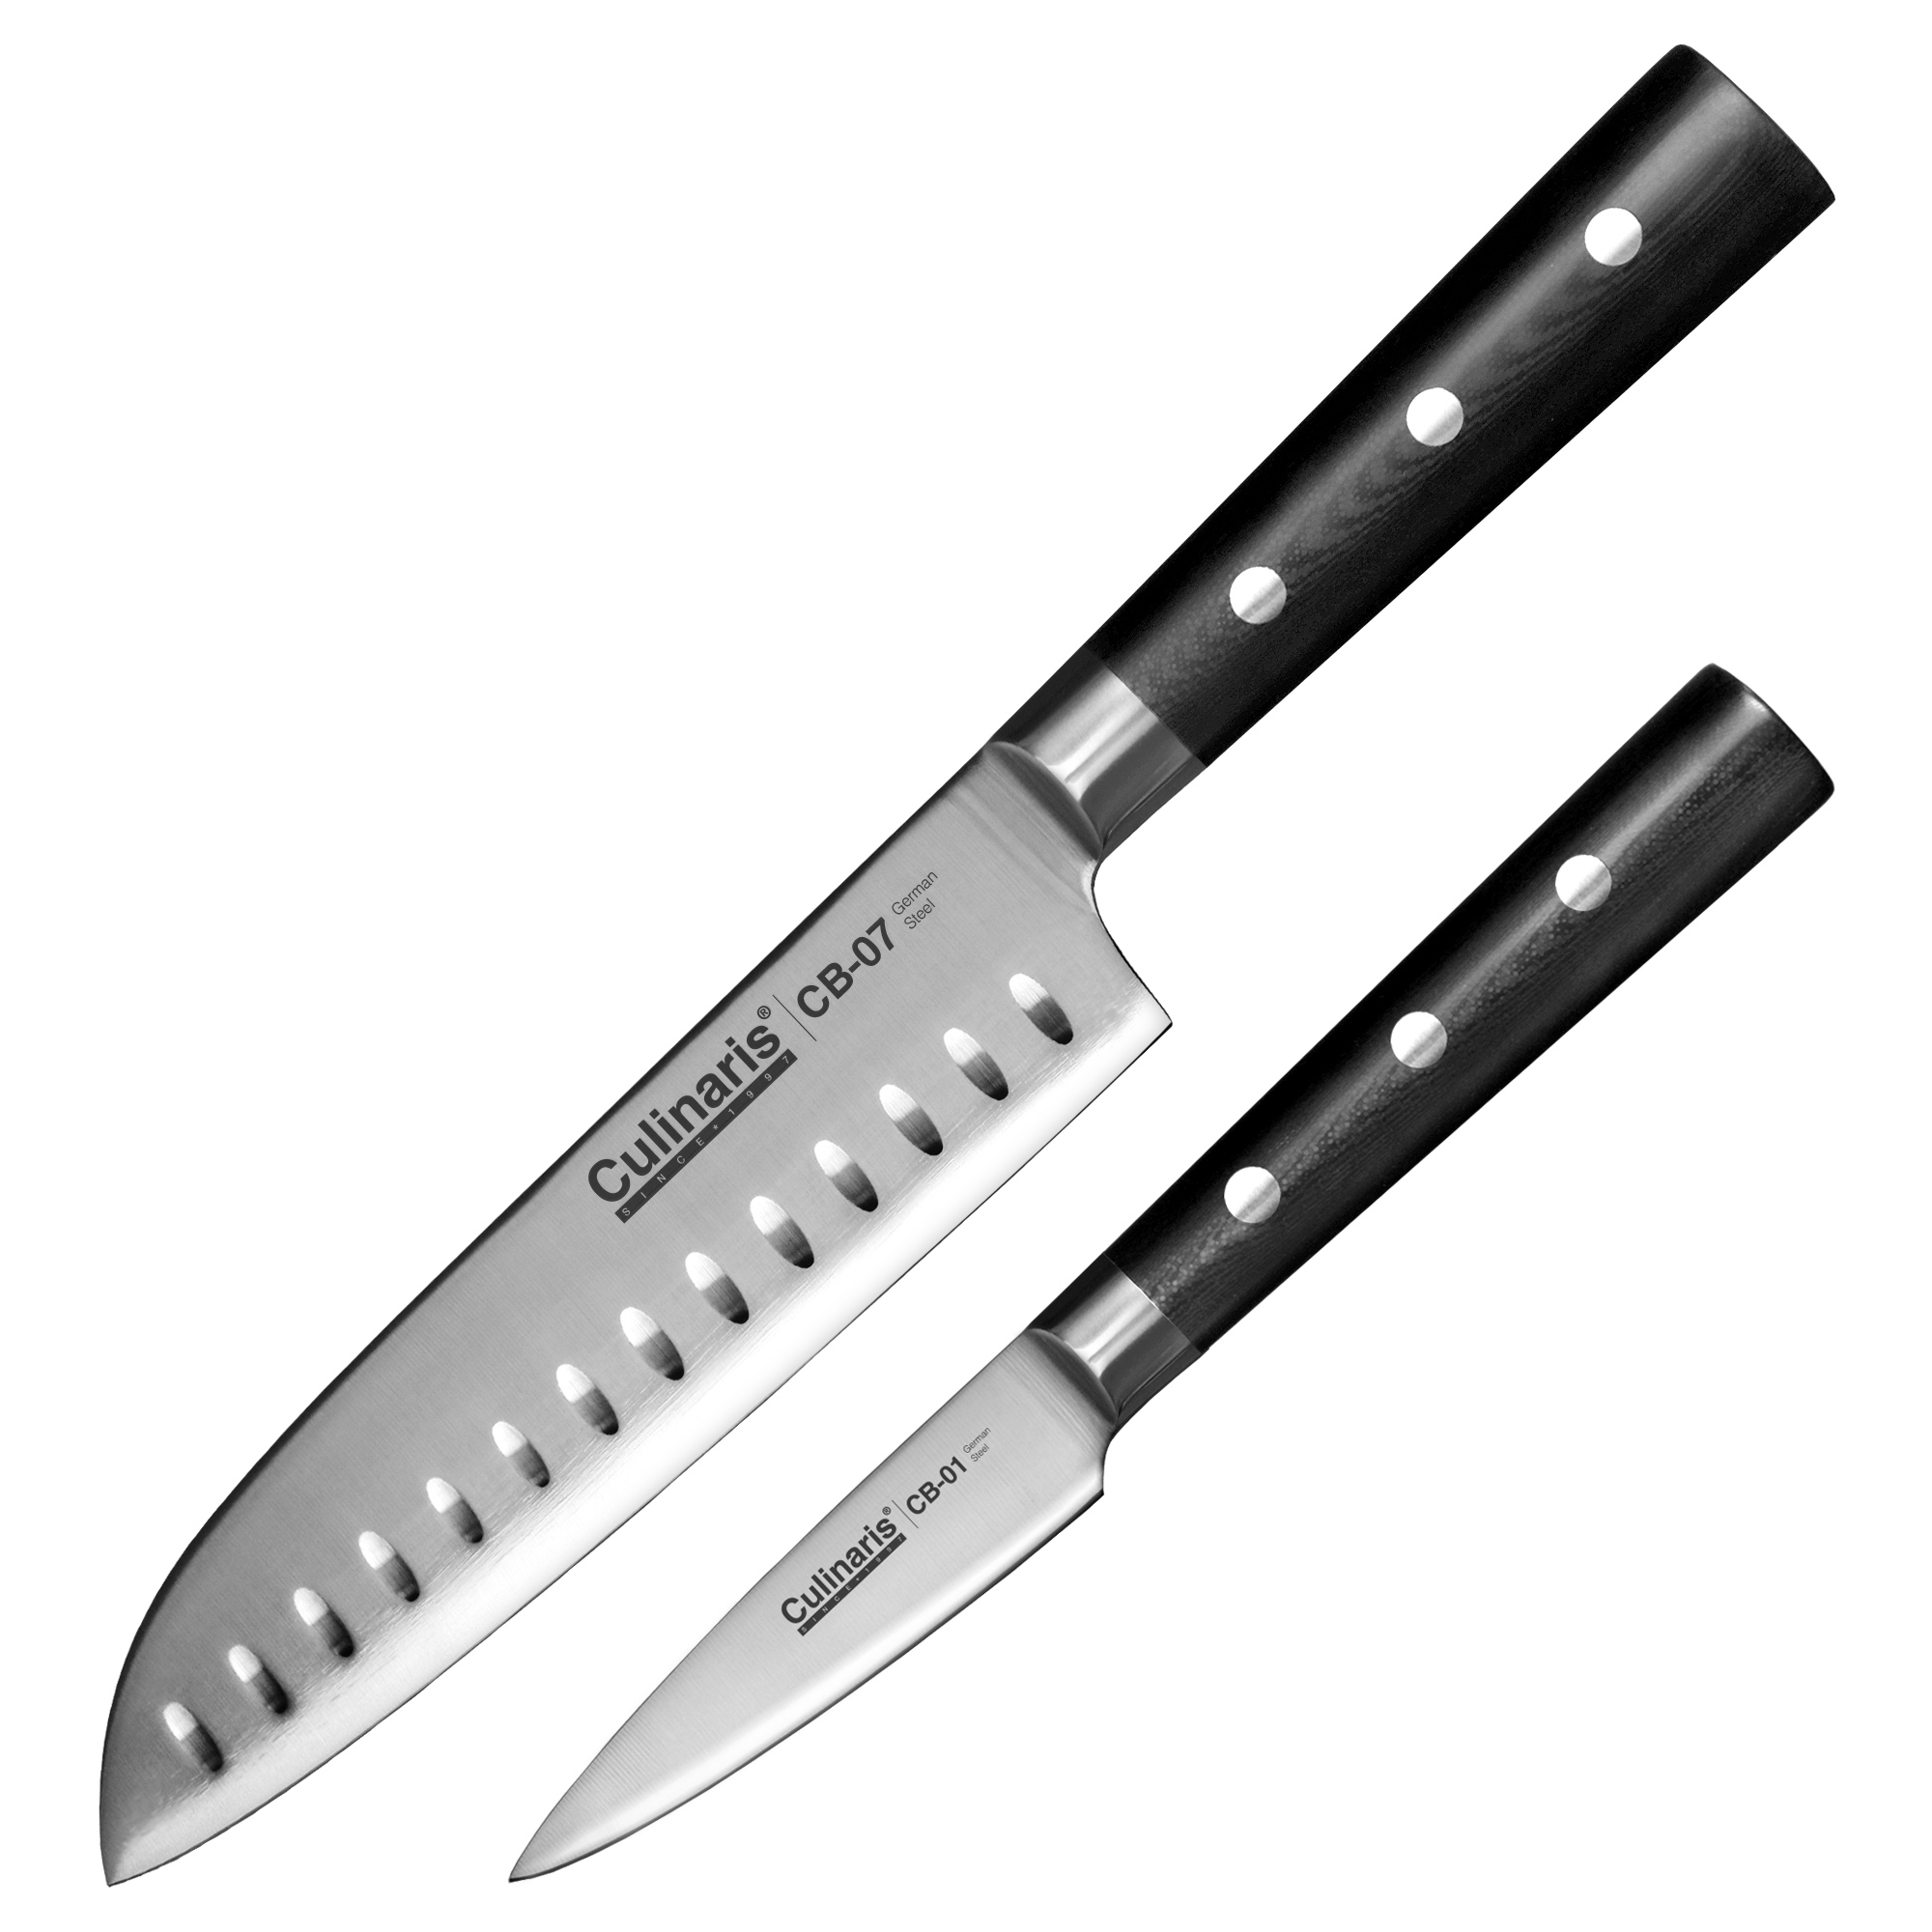 Culinaris - Knife Set - Santoku CB-07 + Paring Knife CB-01